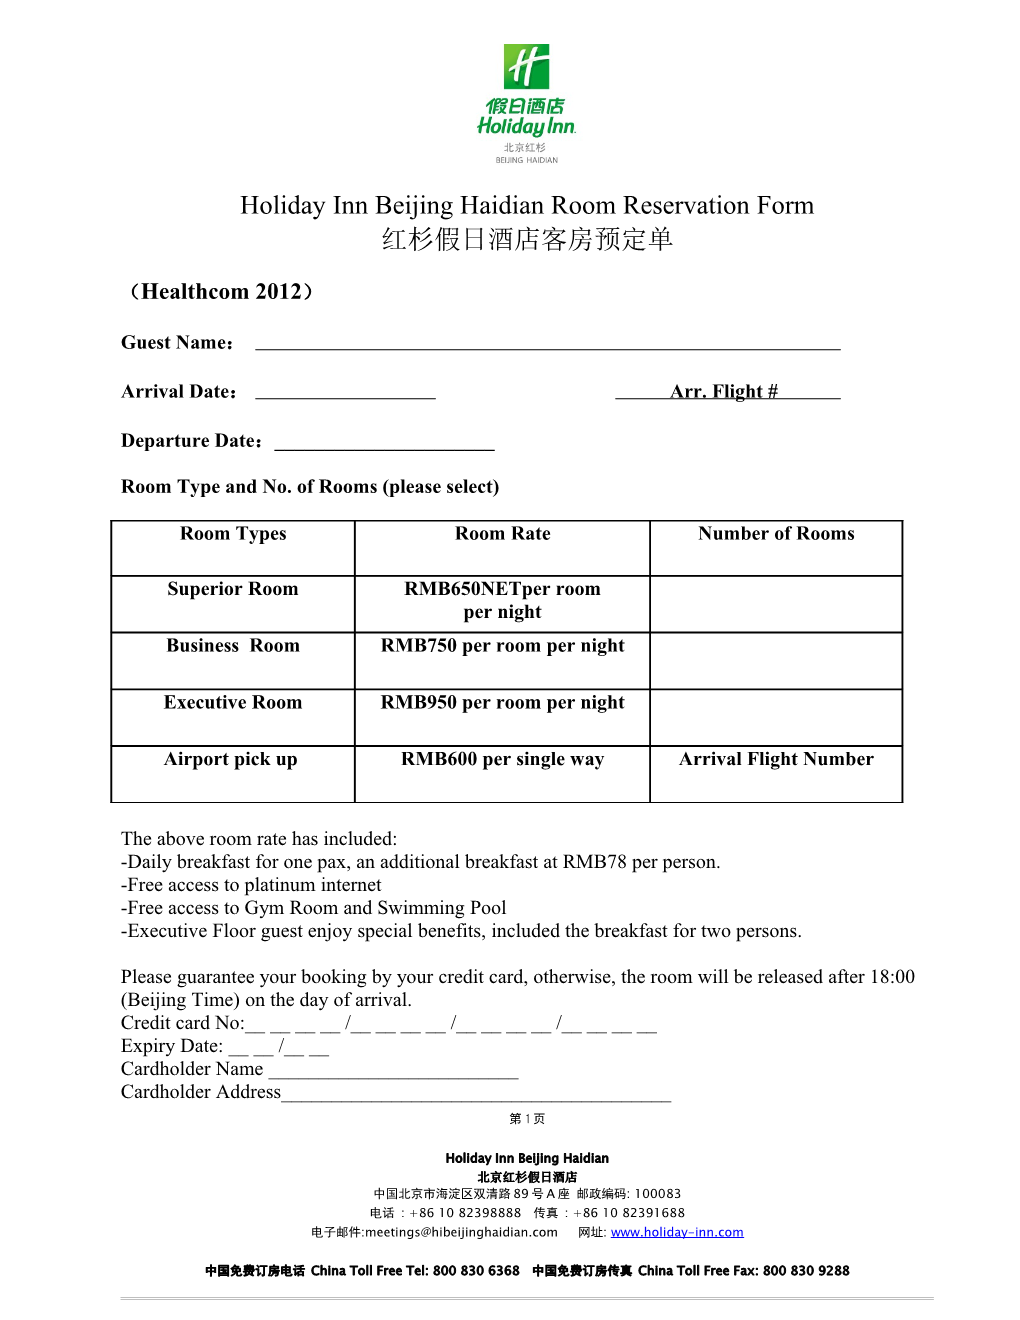 Holiday Inn Beijing Haidian Room Reservation Form